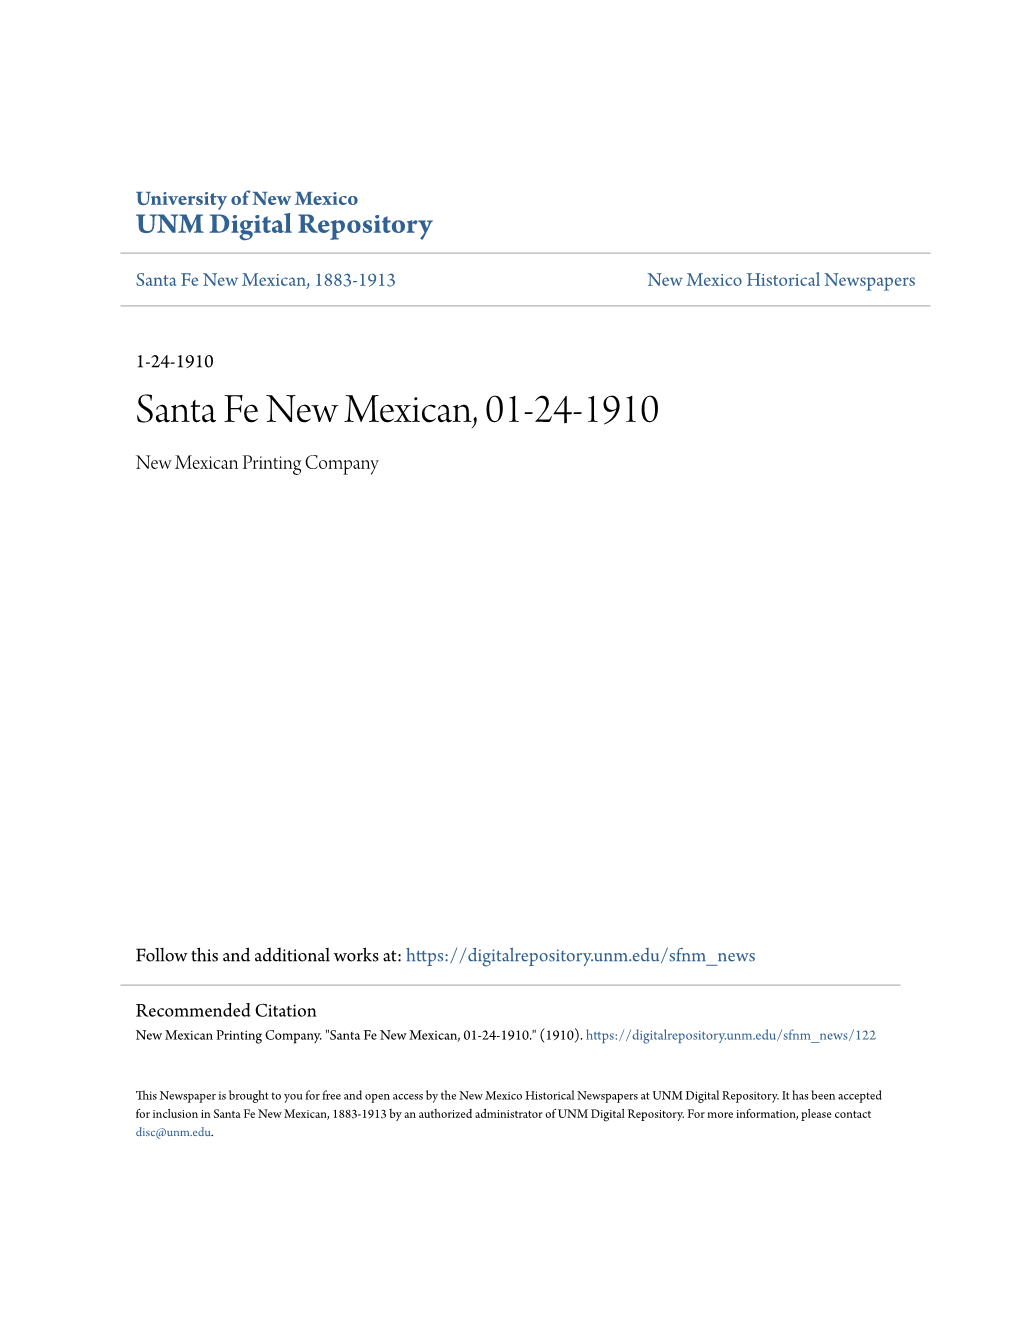 Santa Fe New Mexican, 01-24-1910 New Mexican Printing Company